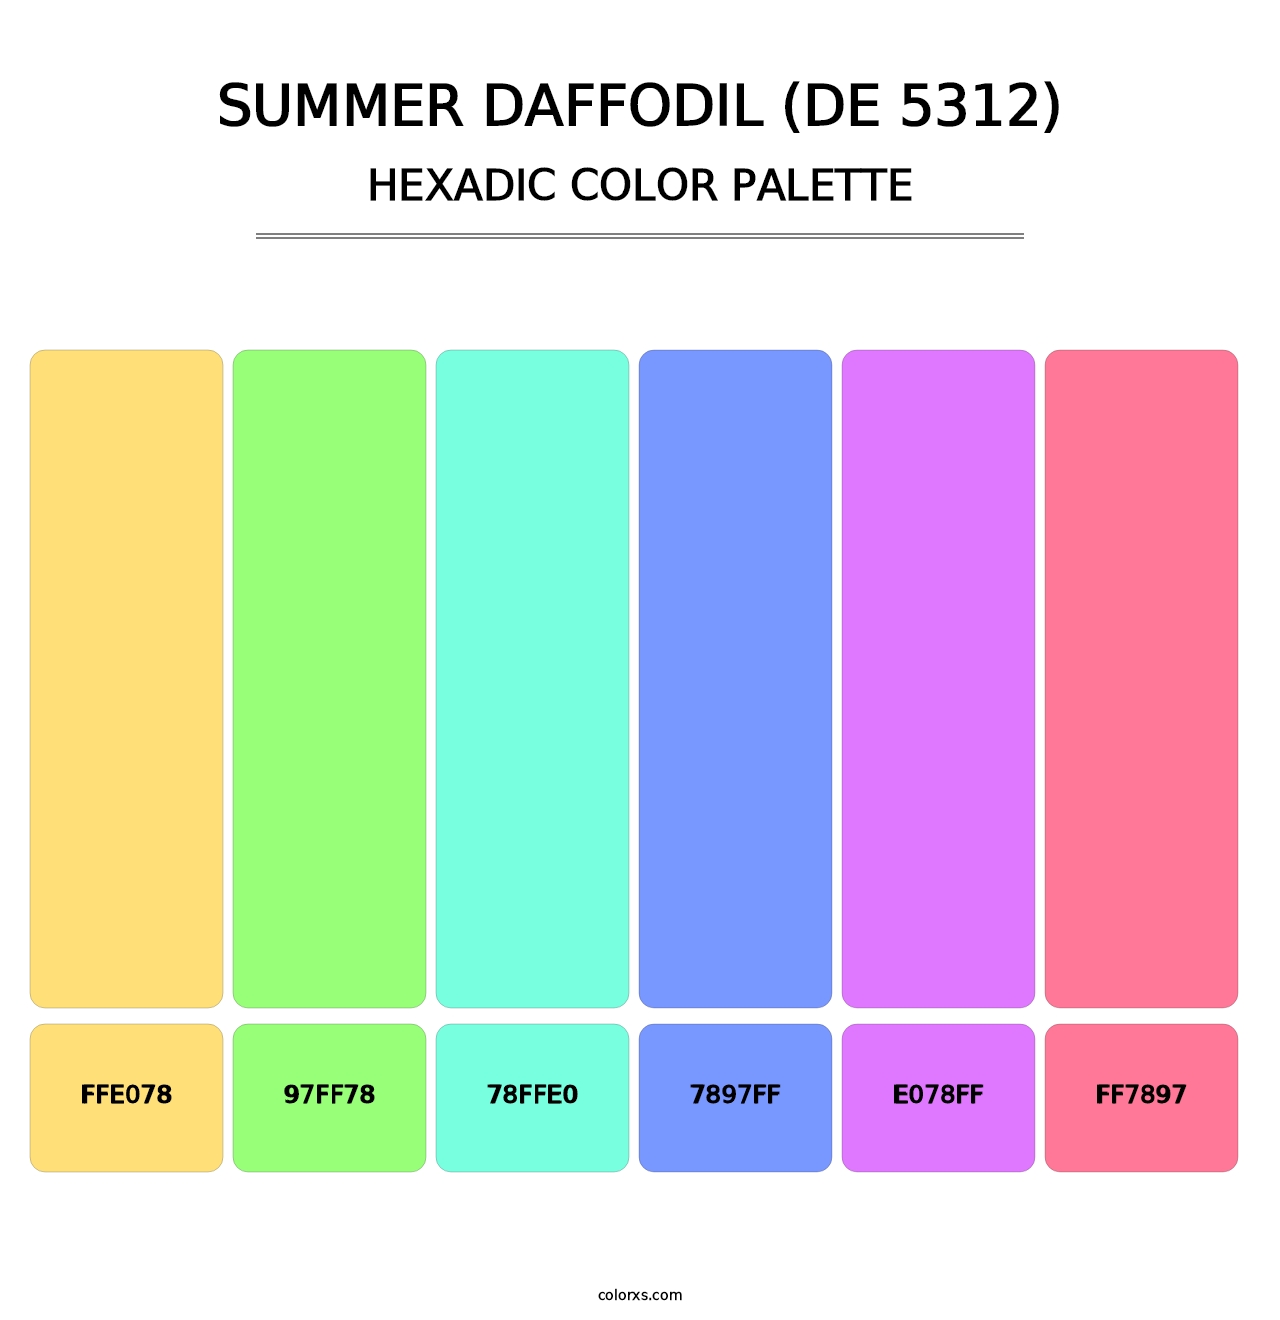 Summer Daffodil (DE 5312) - Hexadic Color Palette